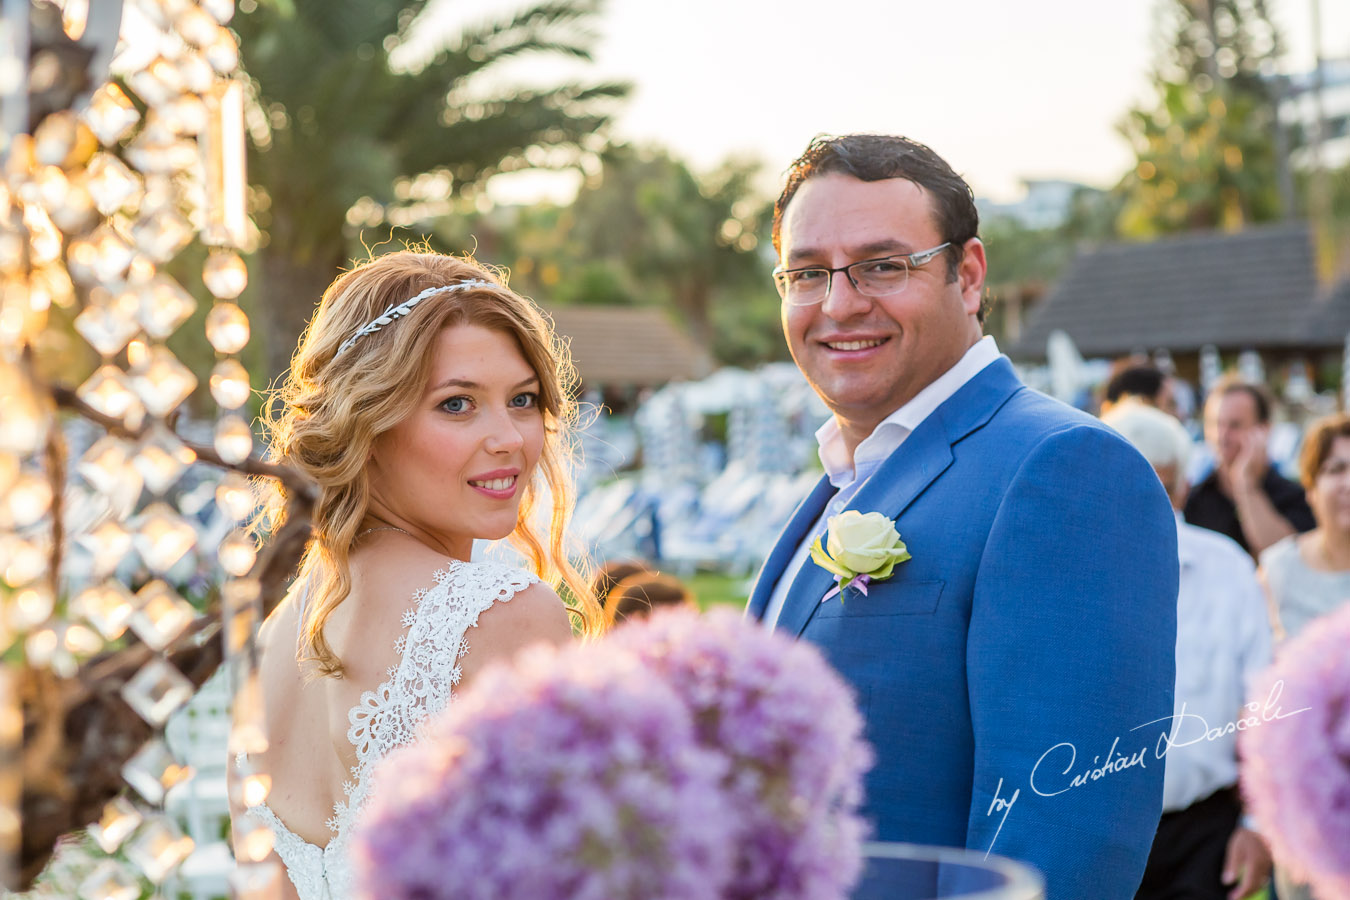 Amathus Limassol Wedding. Cyprus Photographer: Cristian Dascalu